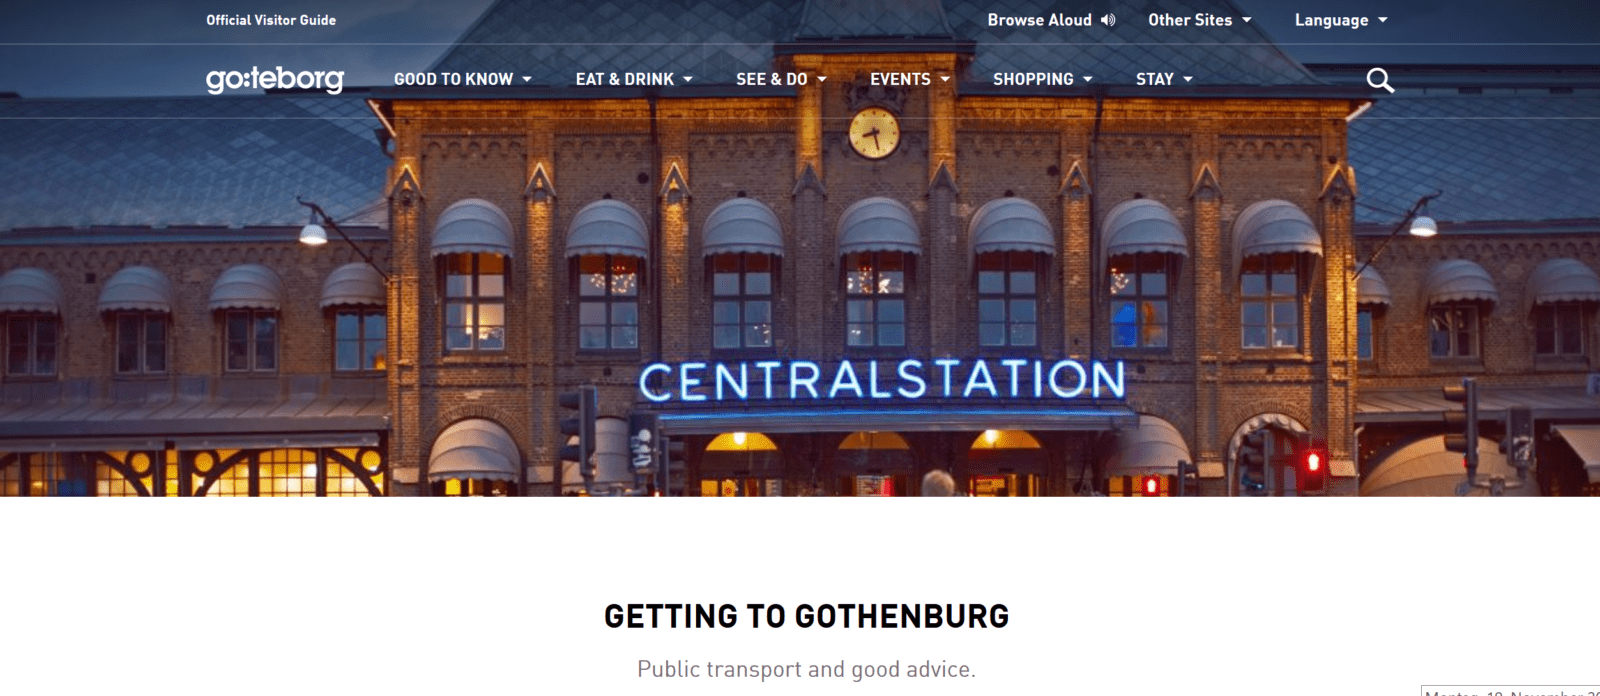 (c) Gothenburg Official Visitor Guide